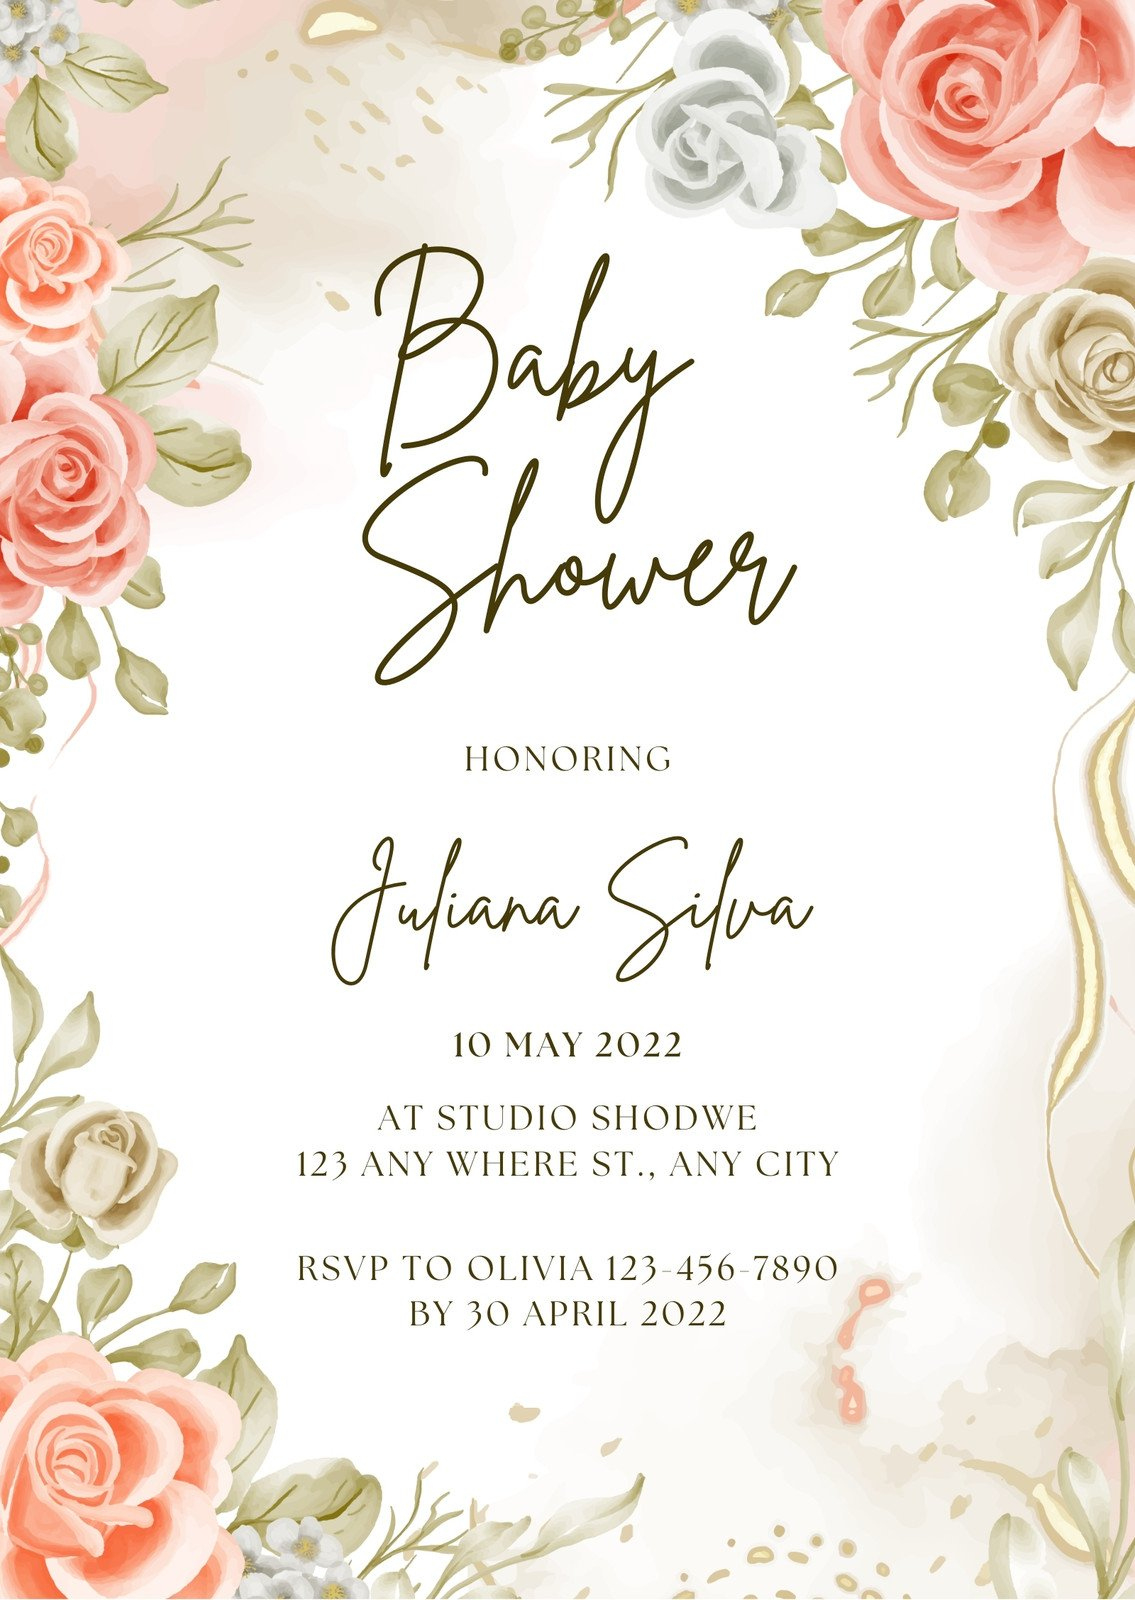 Free, Custom Printable Baby Shower Invitation Templates | Canva with Free Baby Shower Invitation Maker Online Printable